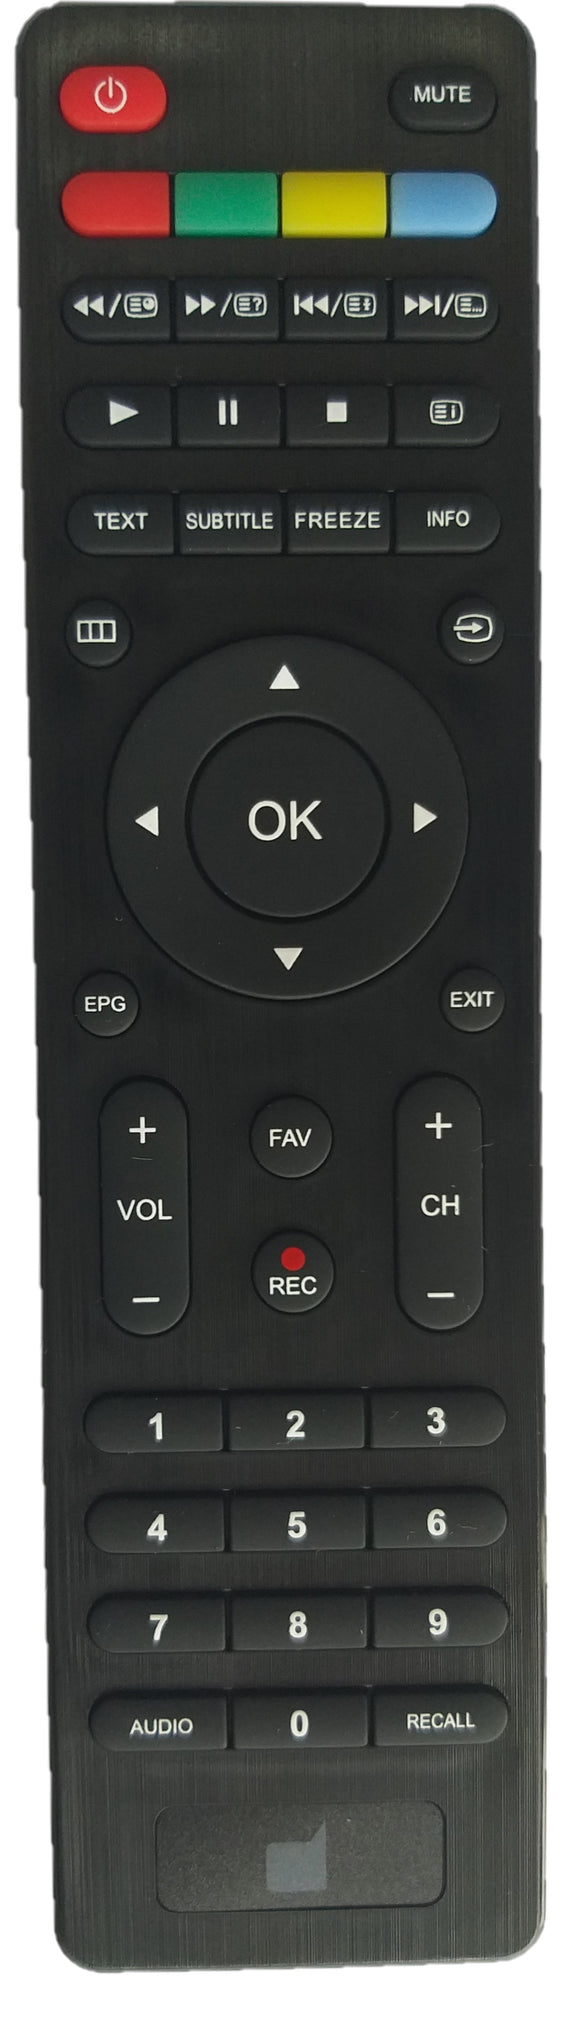 Remote control (NOT DVD) (504Q4601101)